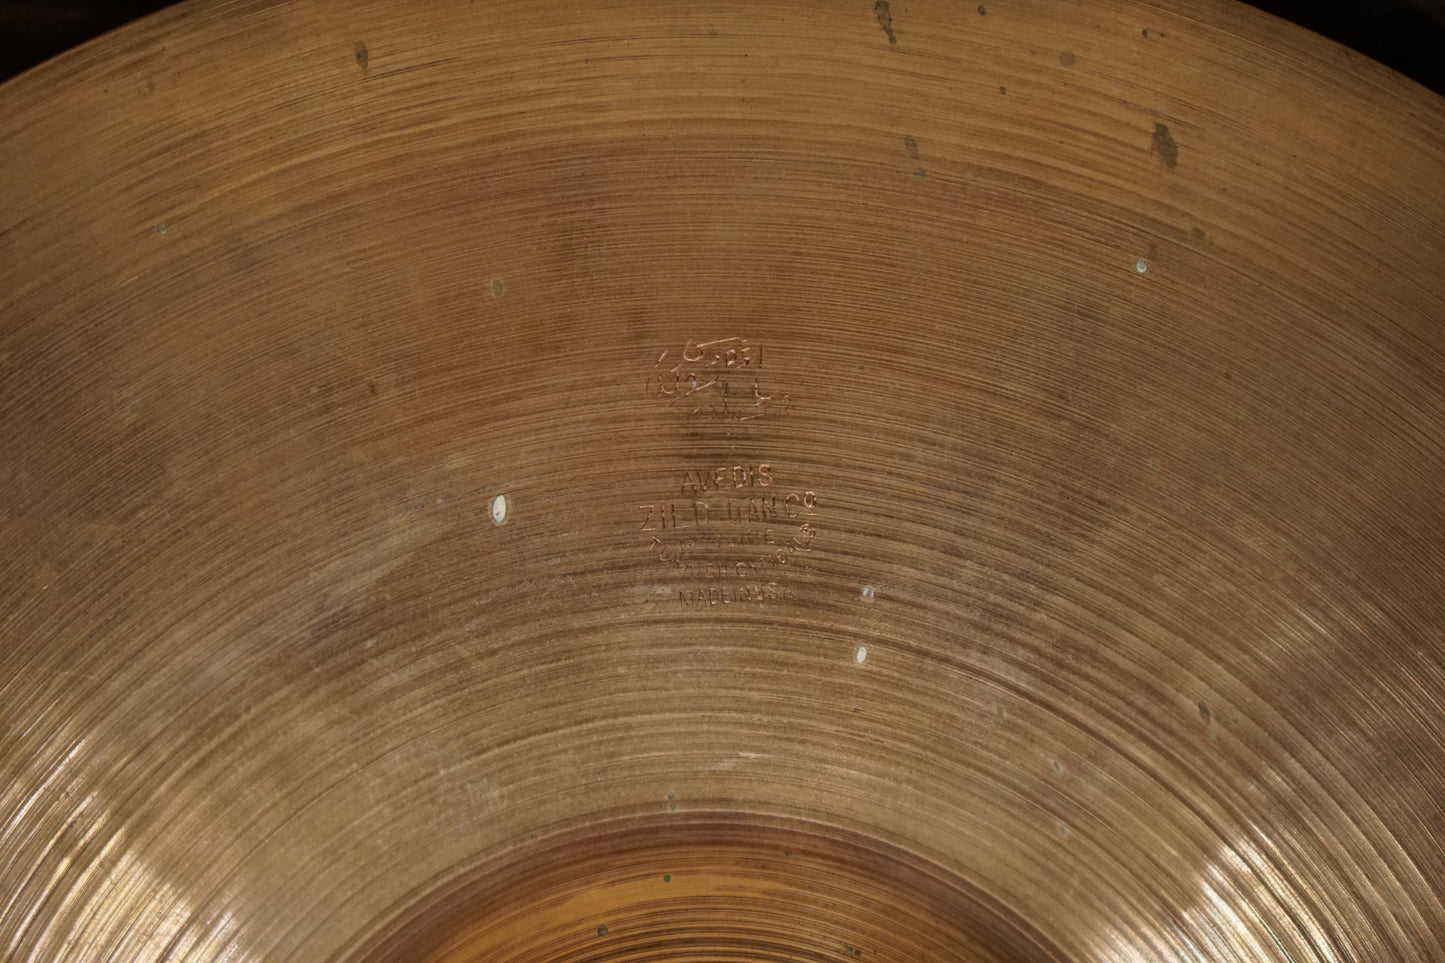 Zildjian 12" Avedis 1930s Splash Cymbal - 342g